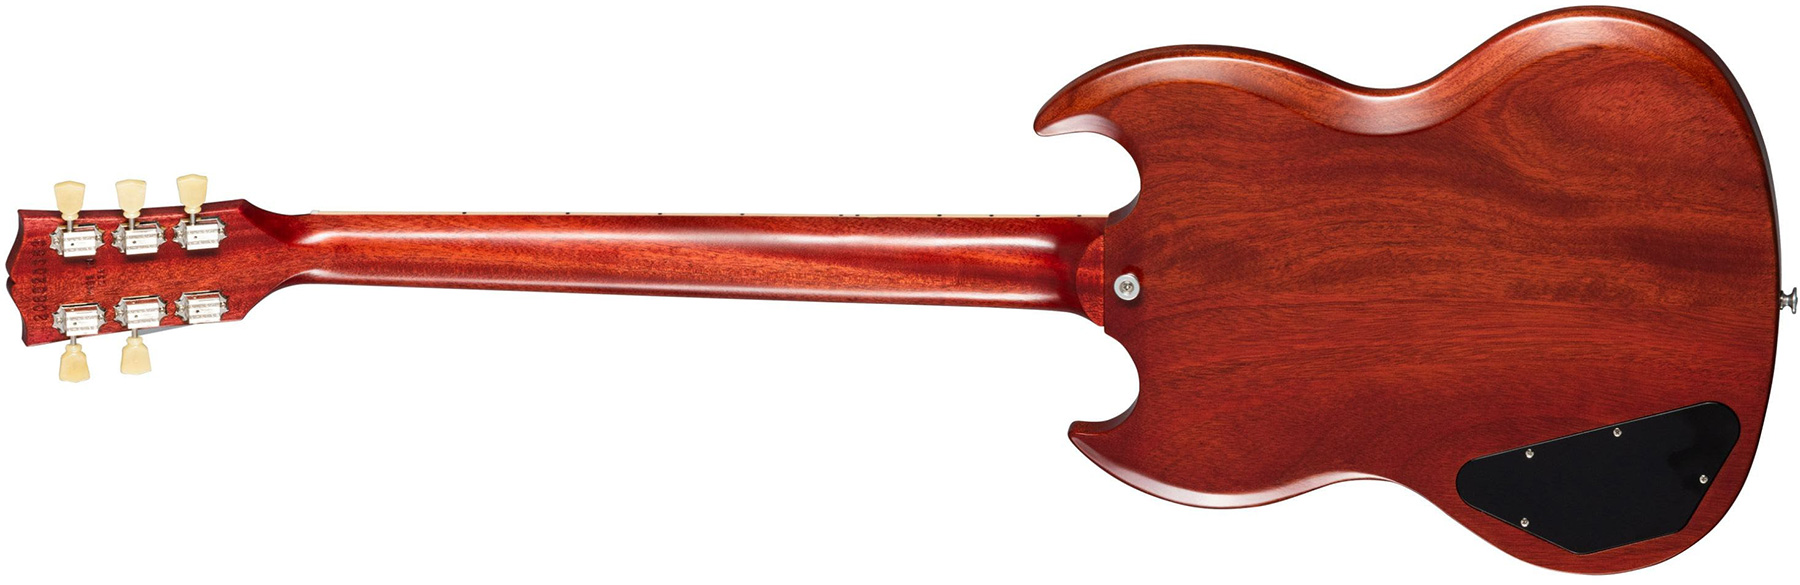 Gibson Sg Standard 1961 Faded Maestro Vibrola Original 2h Trem Rw - Vintage Cherry - Guitarra eléctrica de doble corte - Variation 1